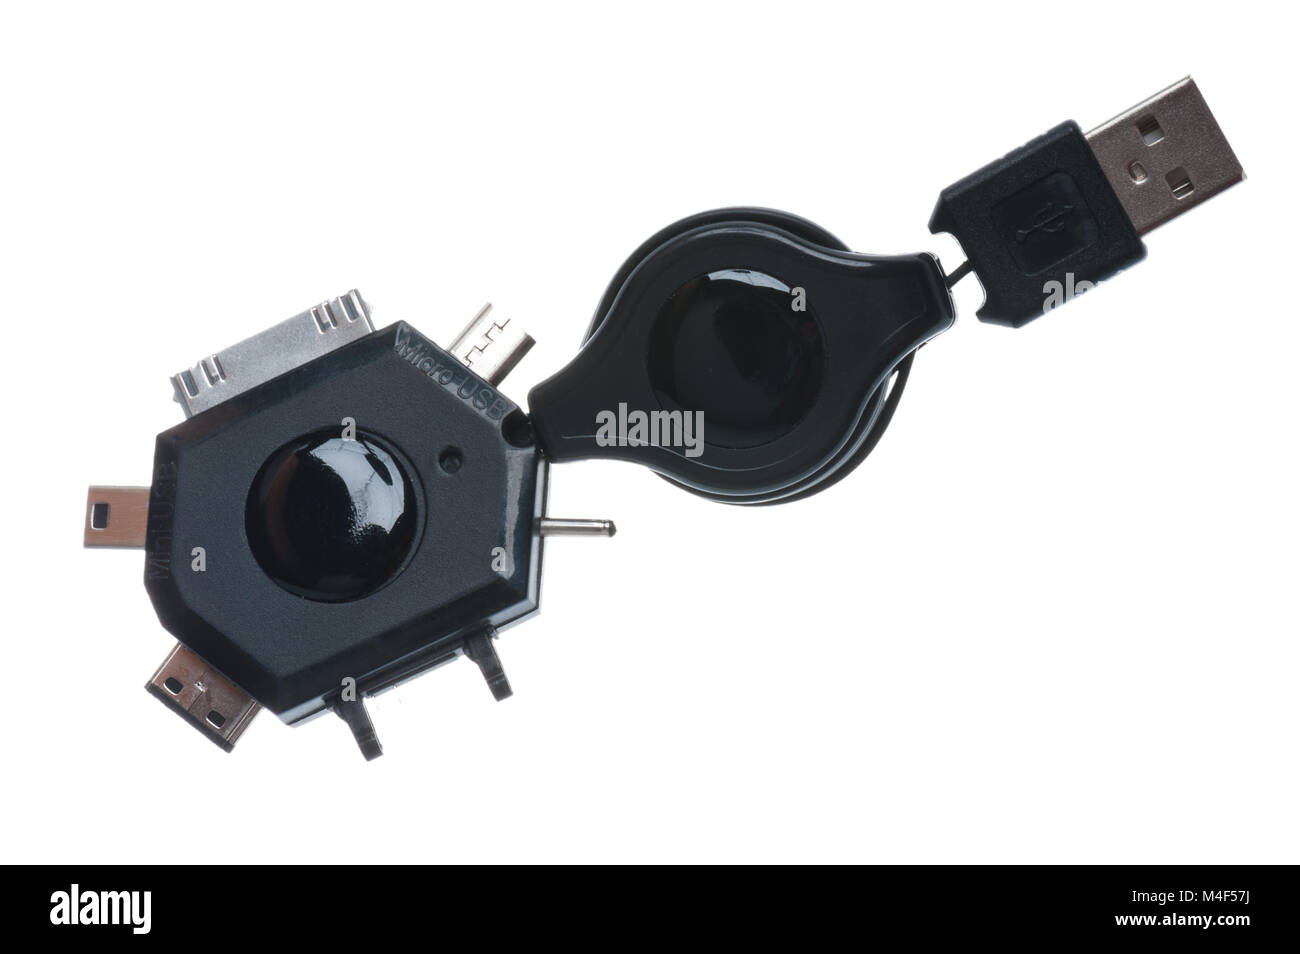 mini usb adapter isolated on white Stock Photo